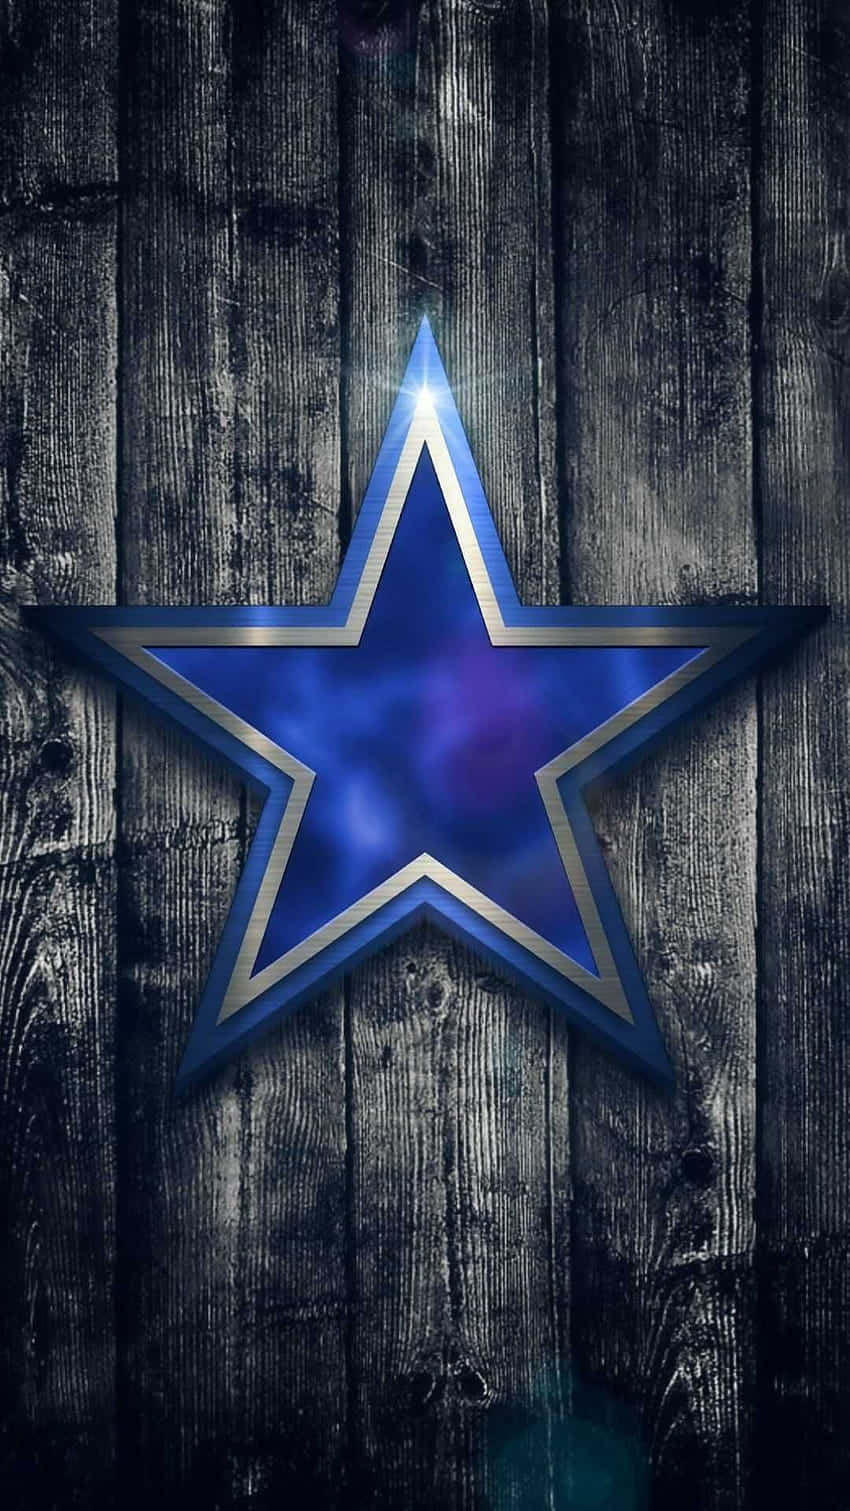 Papelde Parede Brilhante Com O Logotipo Das Estrelas Dos Dallas Cowboys No Iphone. Papel de Parede